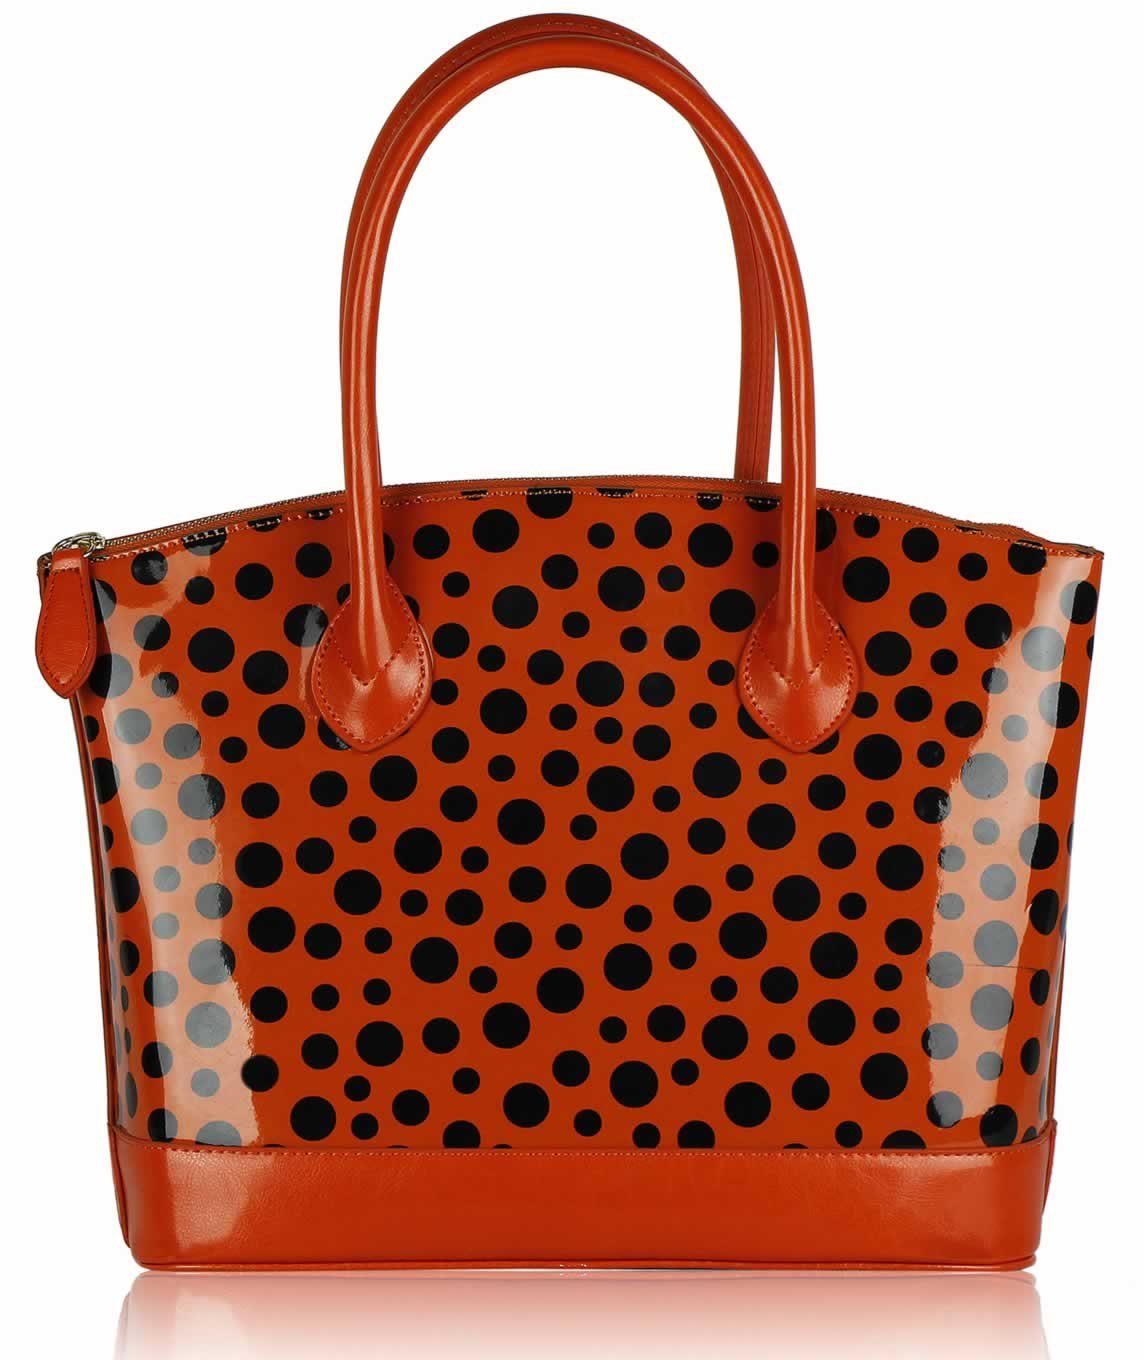 Wholesale Orange Patent Polka Dot Tote Bag